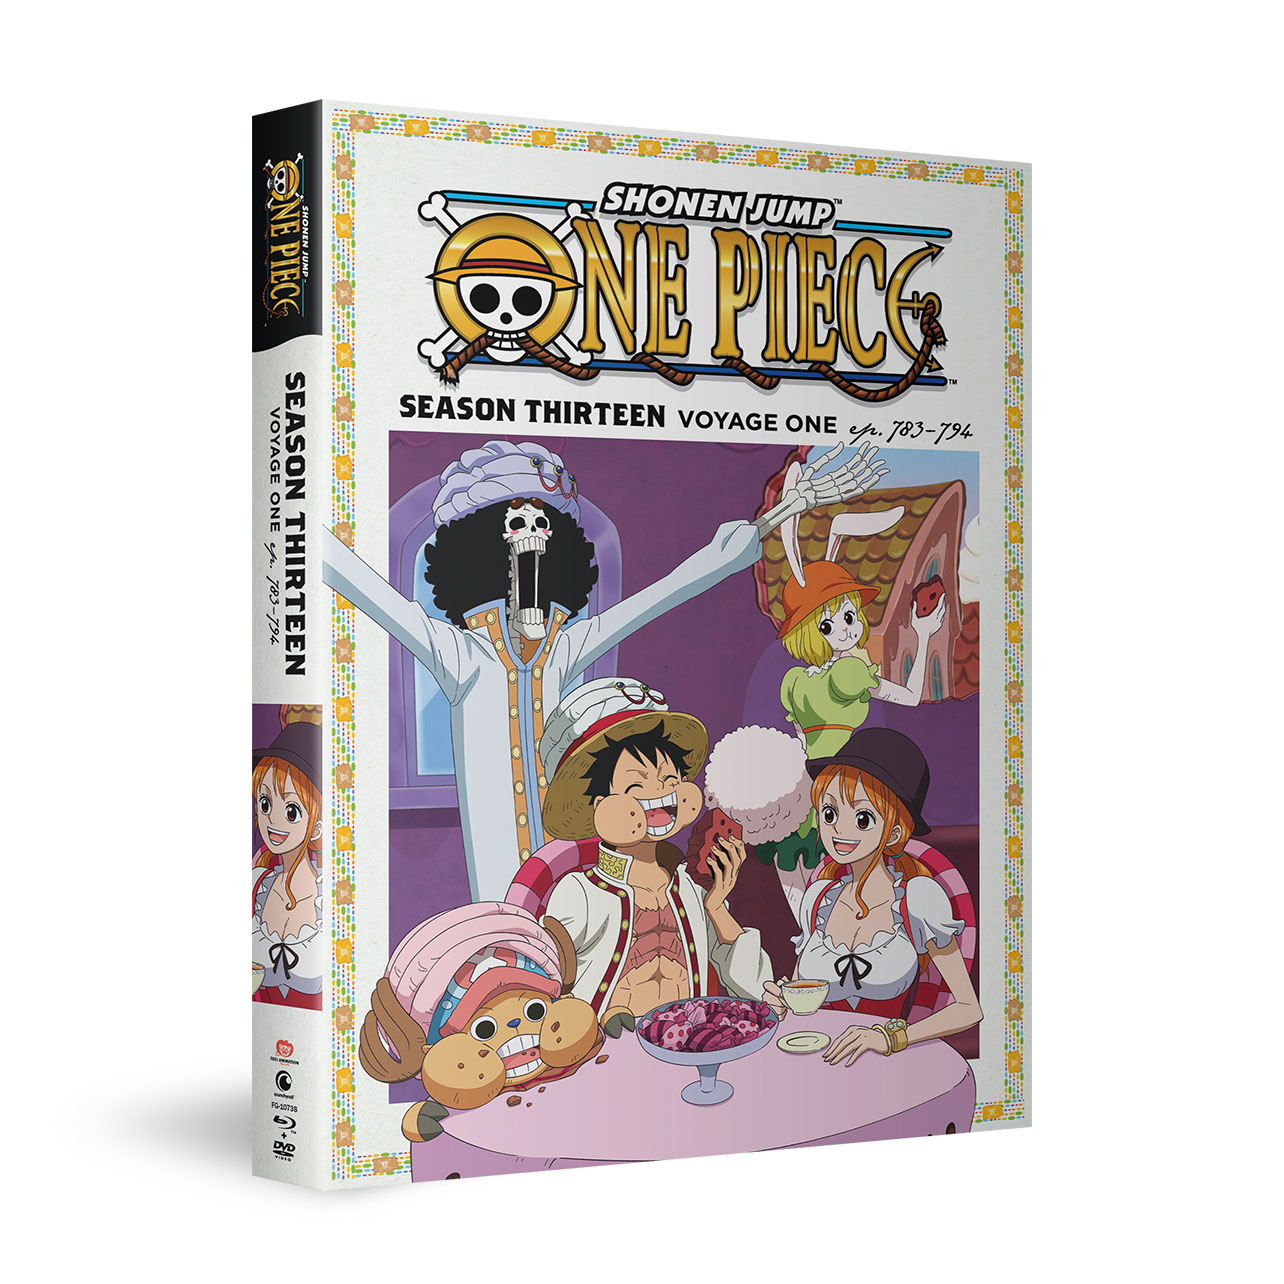 One Piece - Season 13 Voyage 1 - Blu-ray + DVD image count 1